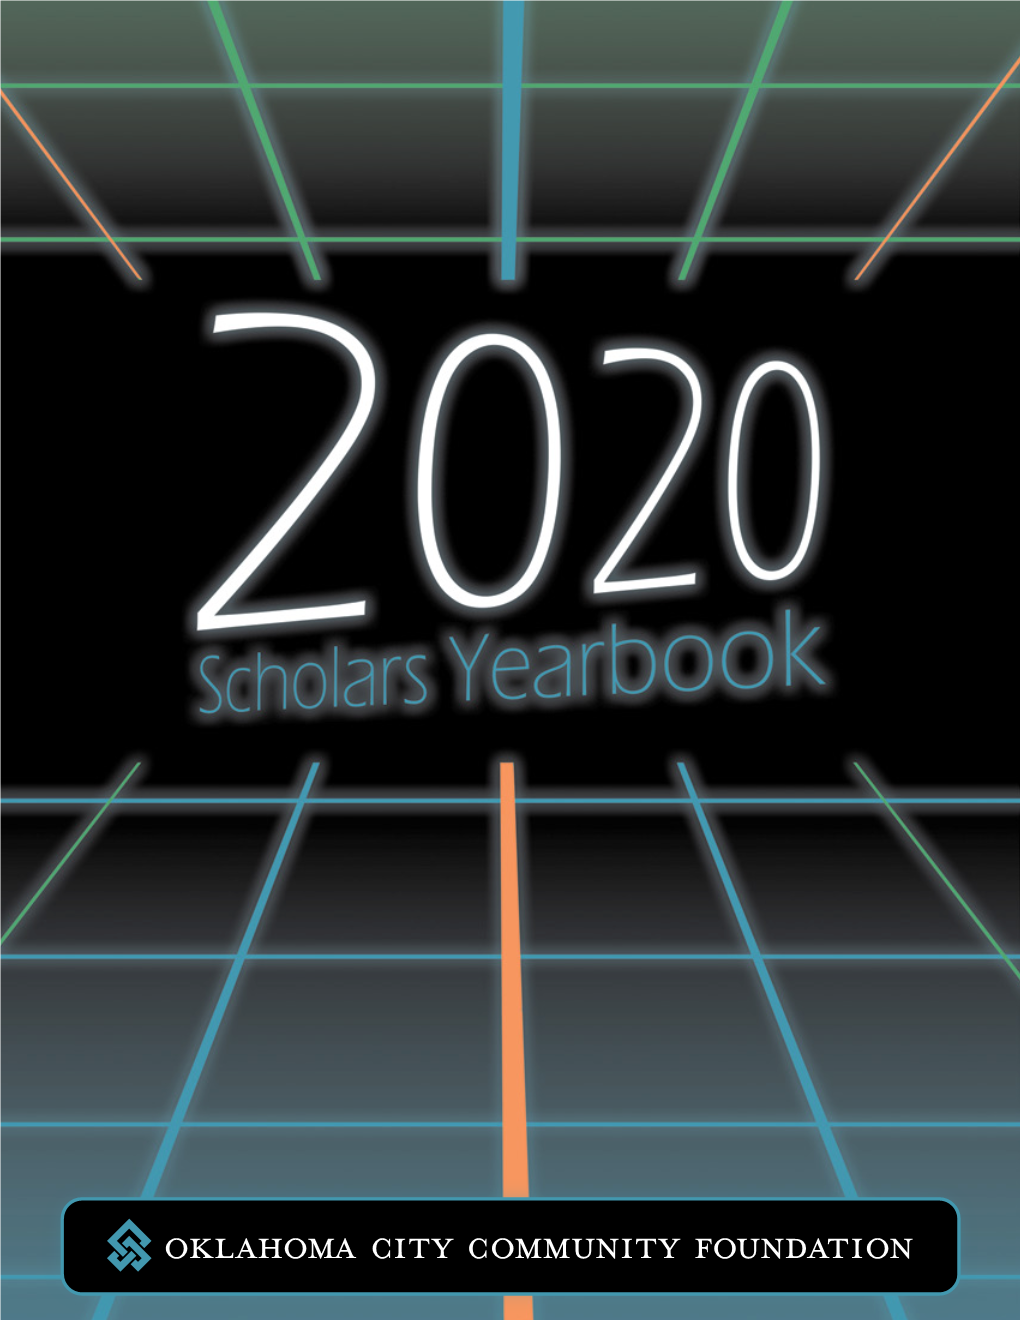 Scholarshipyearbook.Pdf